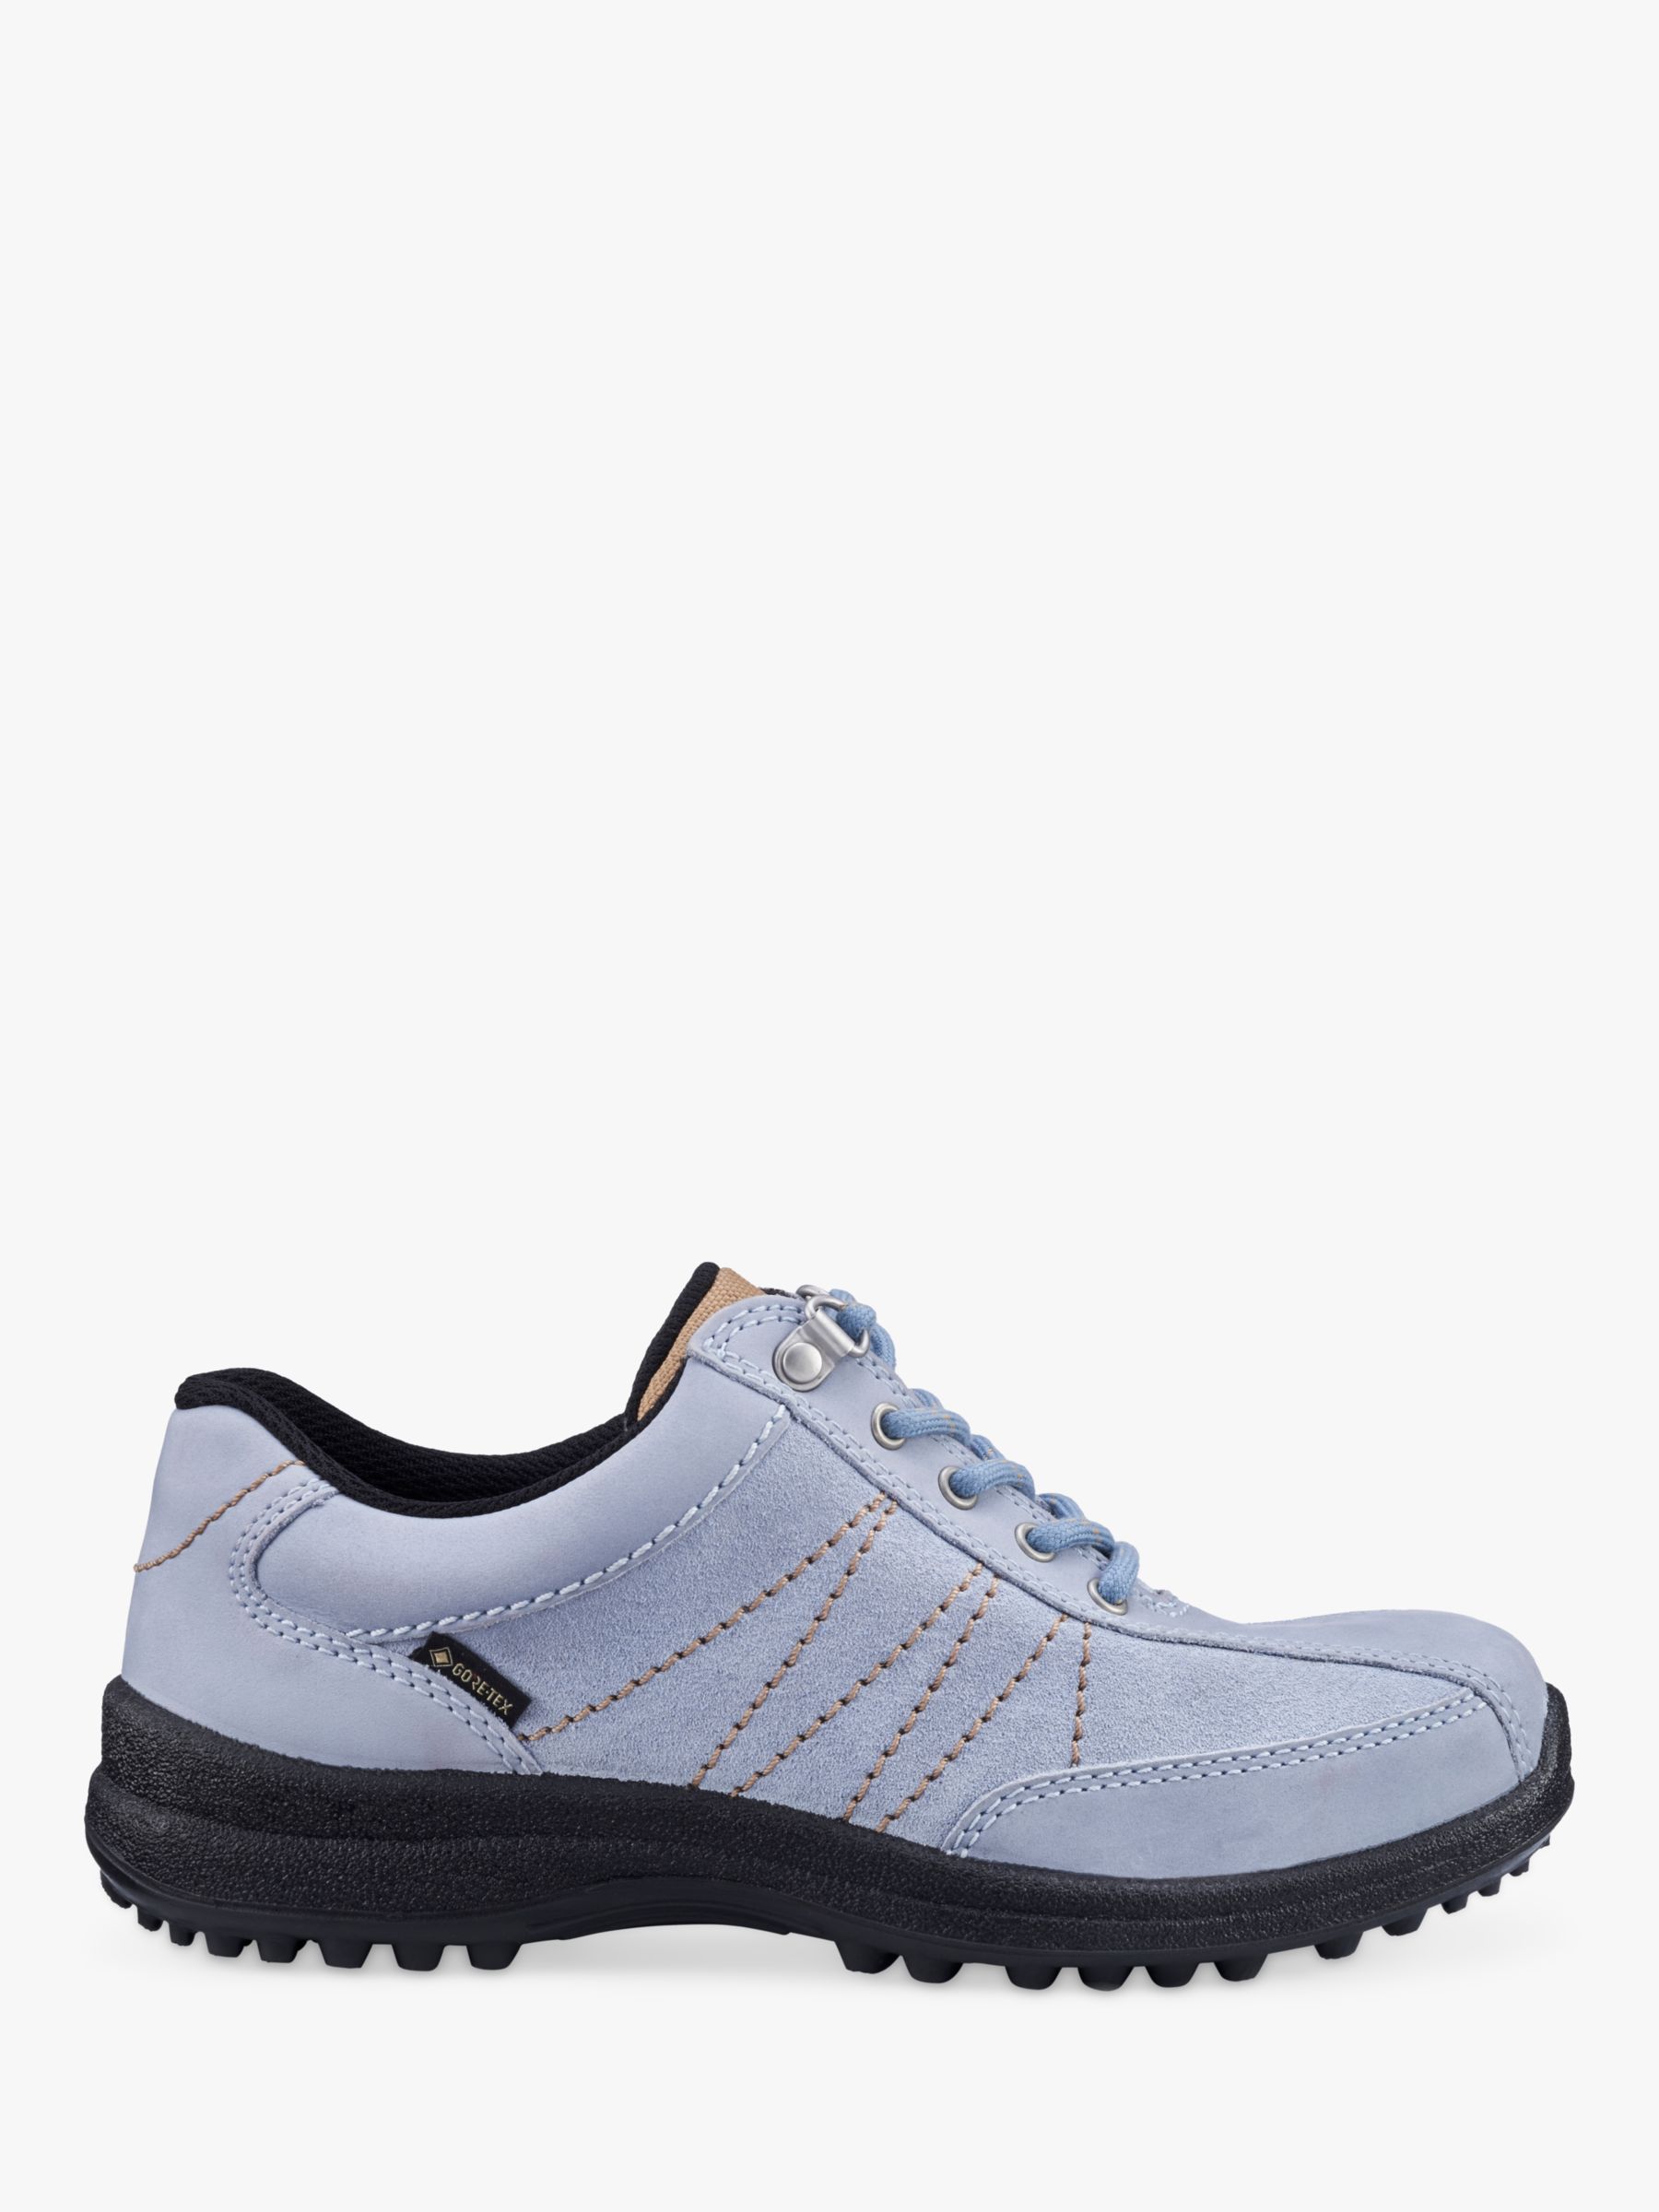 Buy Hotter Mist Wide Fit Gore-Tex Walking Shoes Online at johnlewis.com